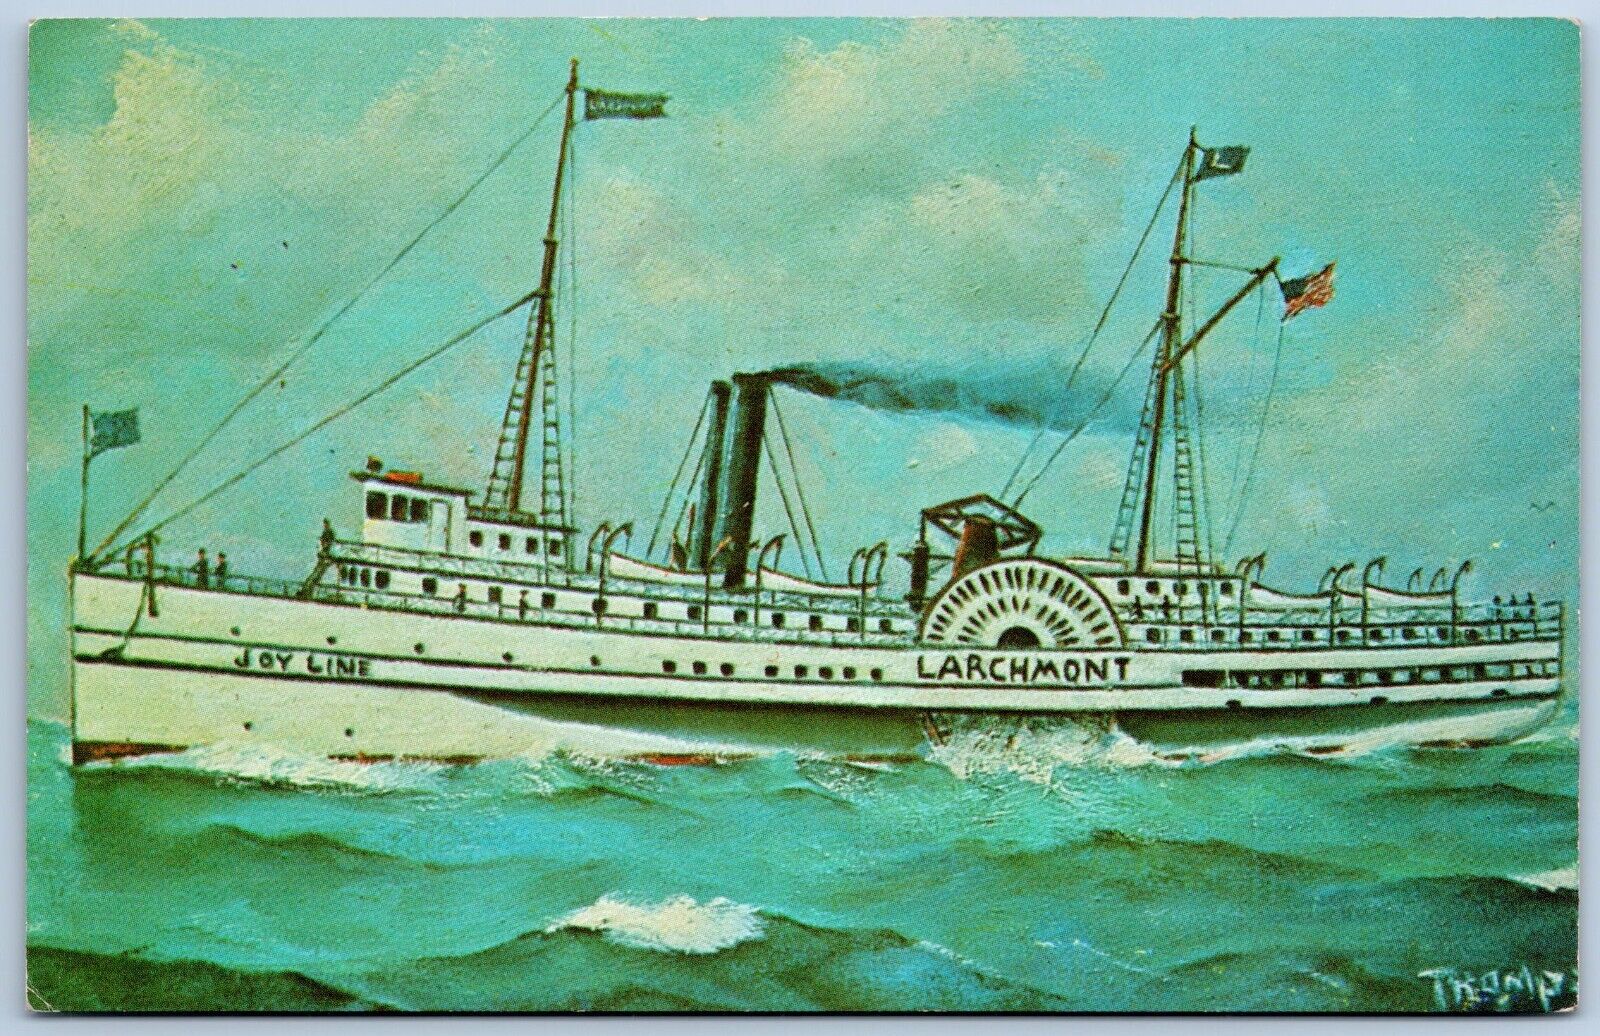 Larchmont Joy Line Steamship Collision Tragedy in Vintage Postcard